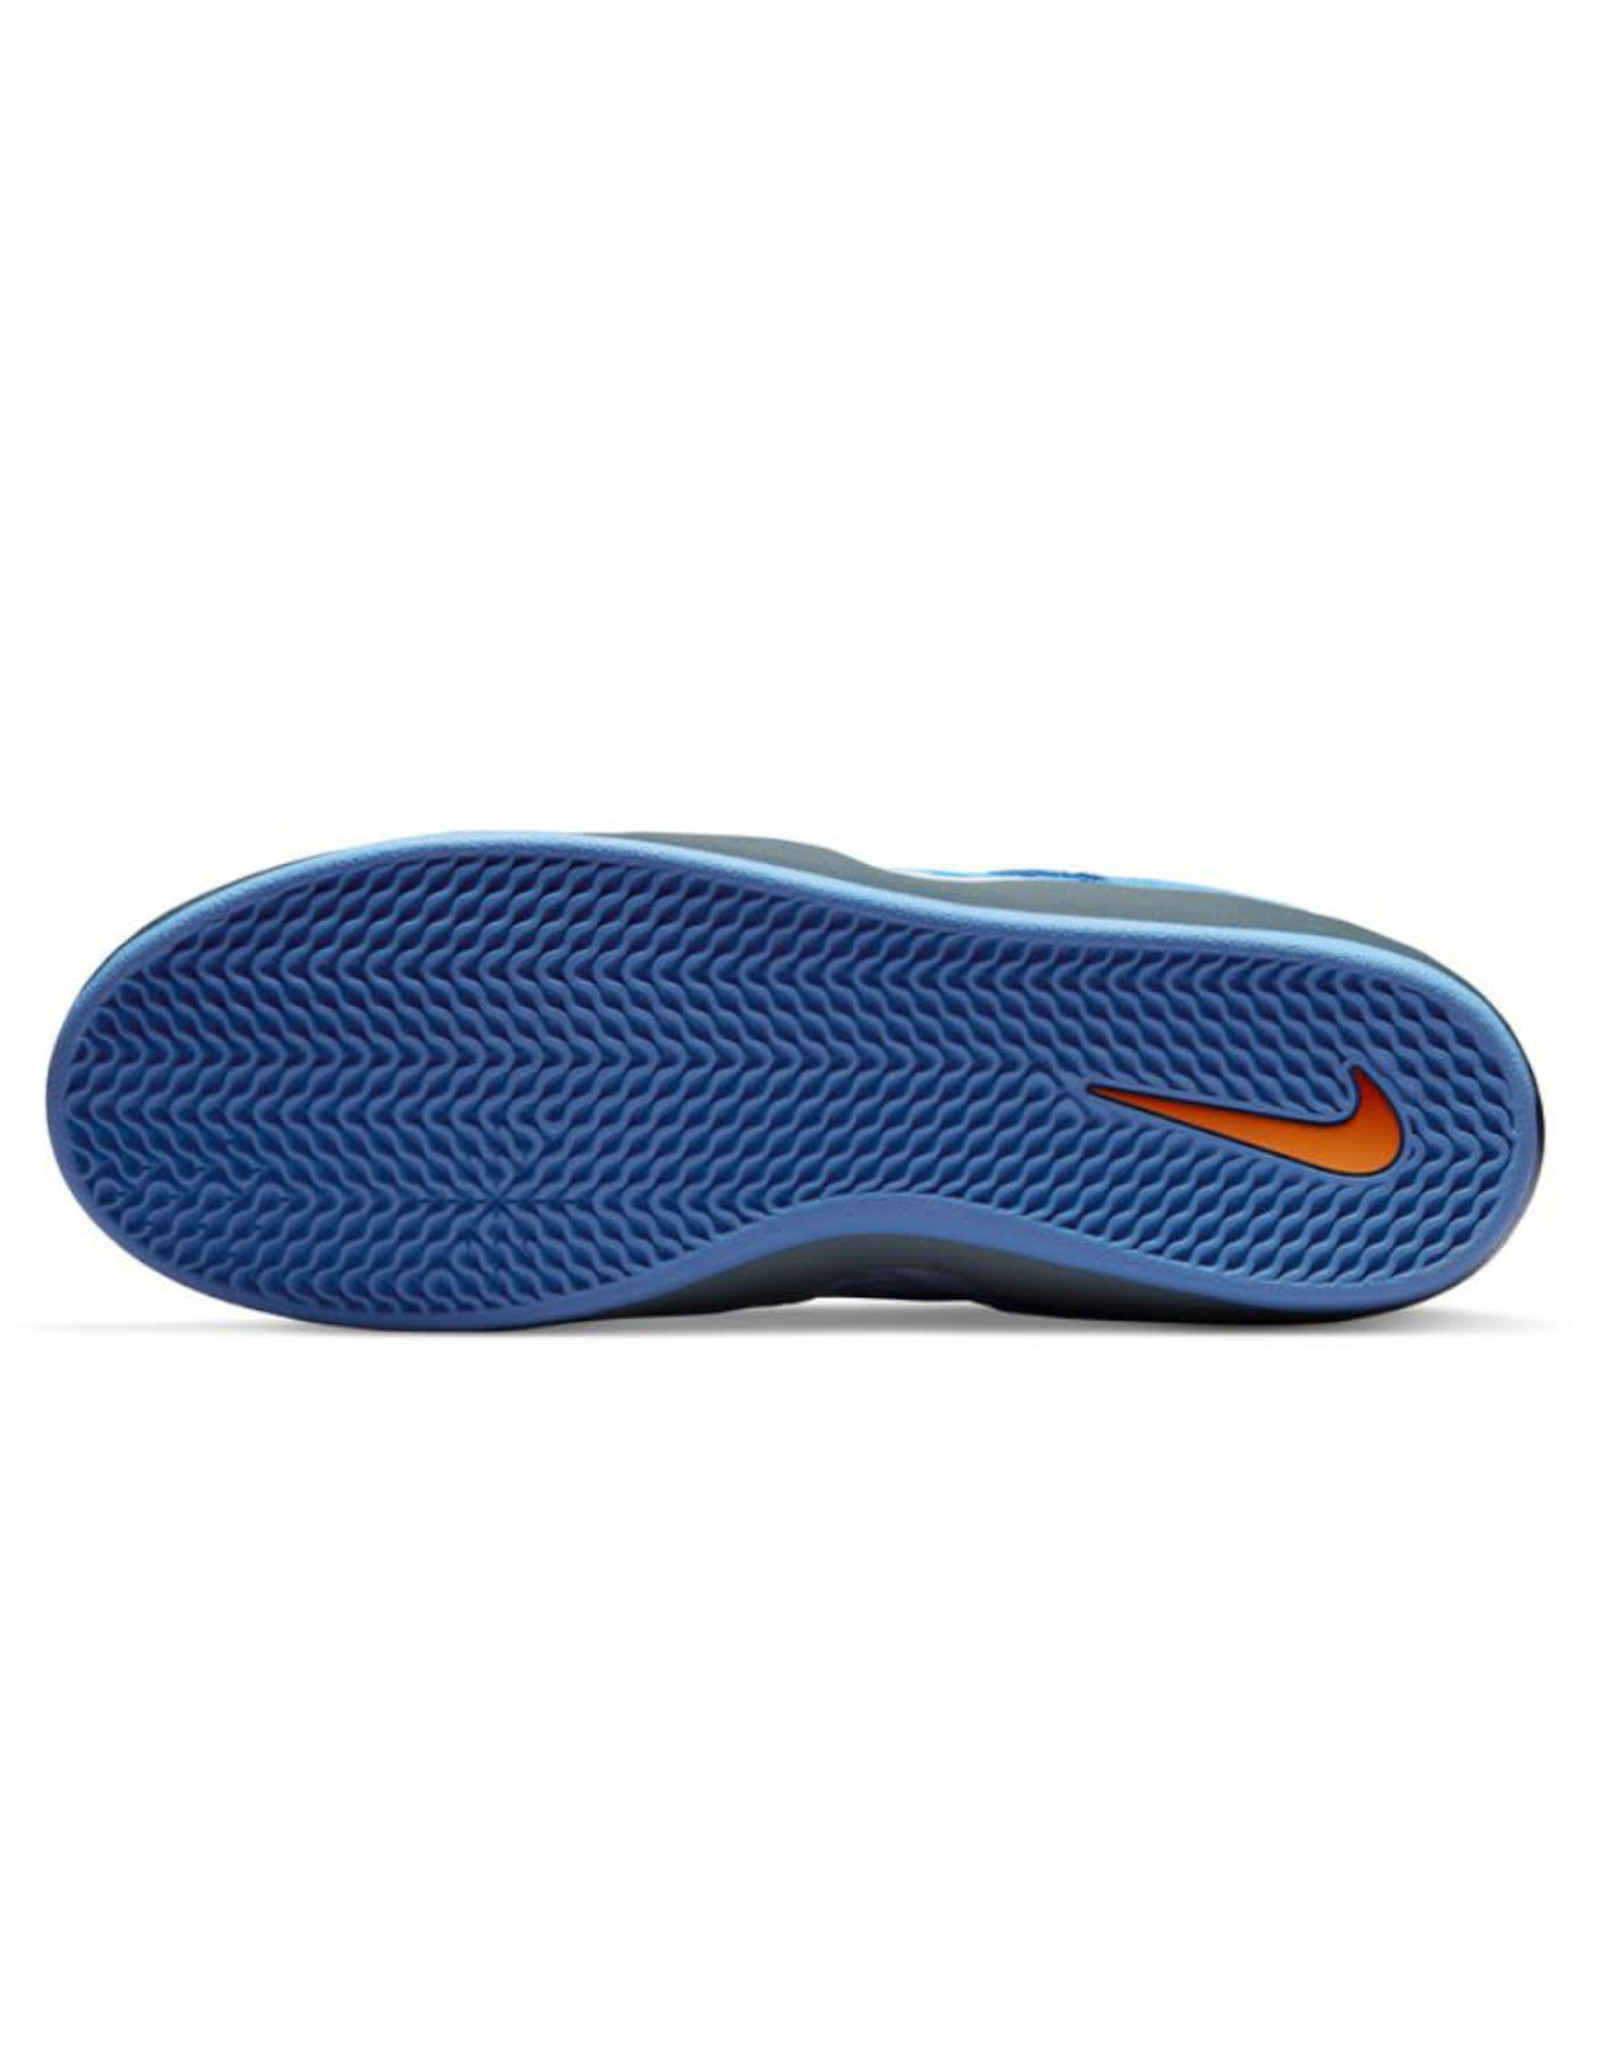 Nike SB Nike SB Shoe Ishod Wair Pro (Pacific Blue)